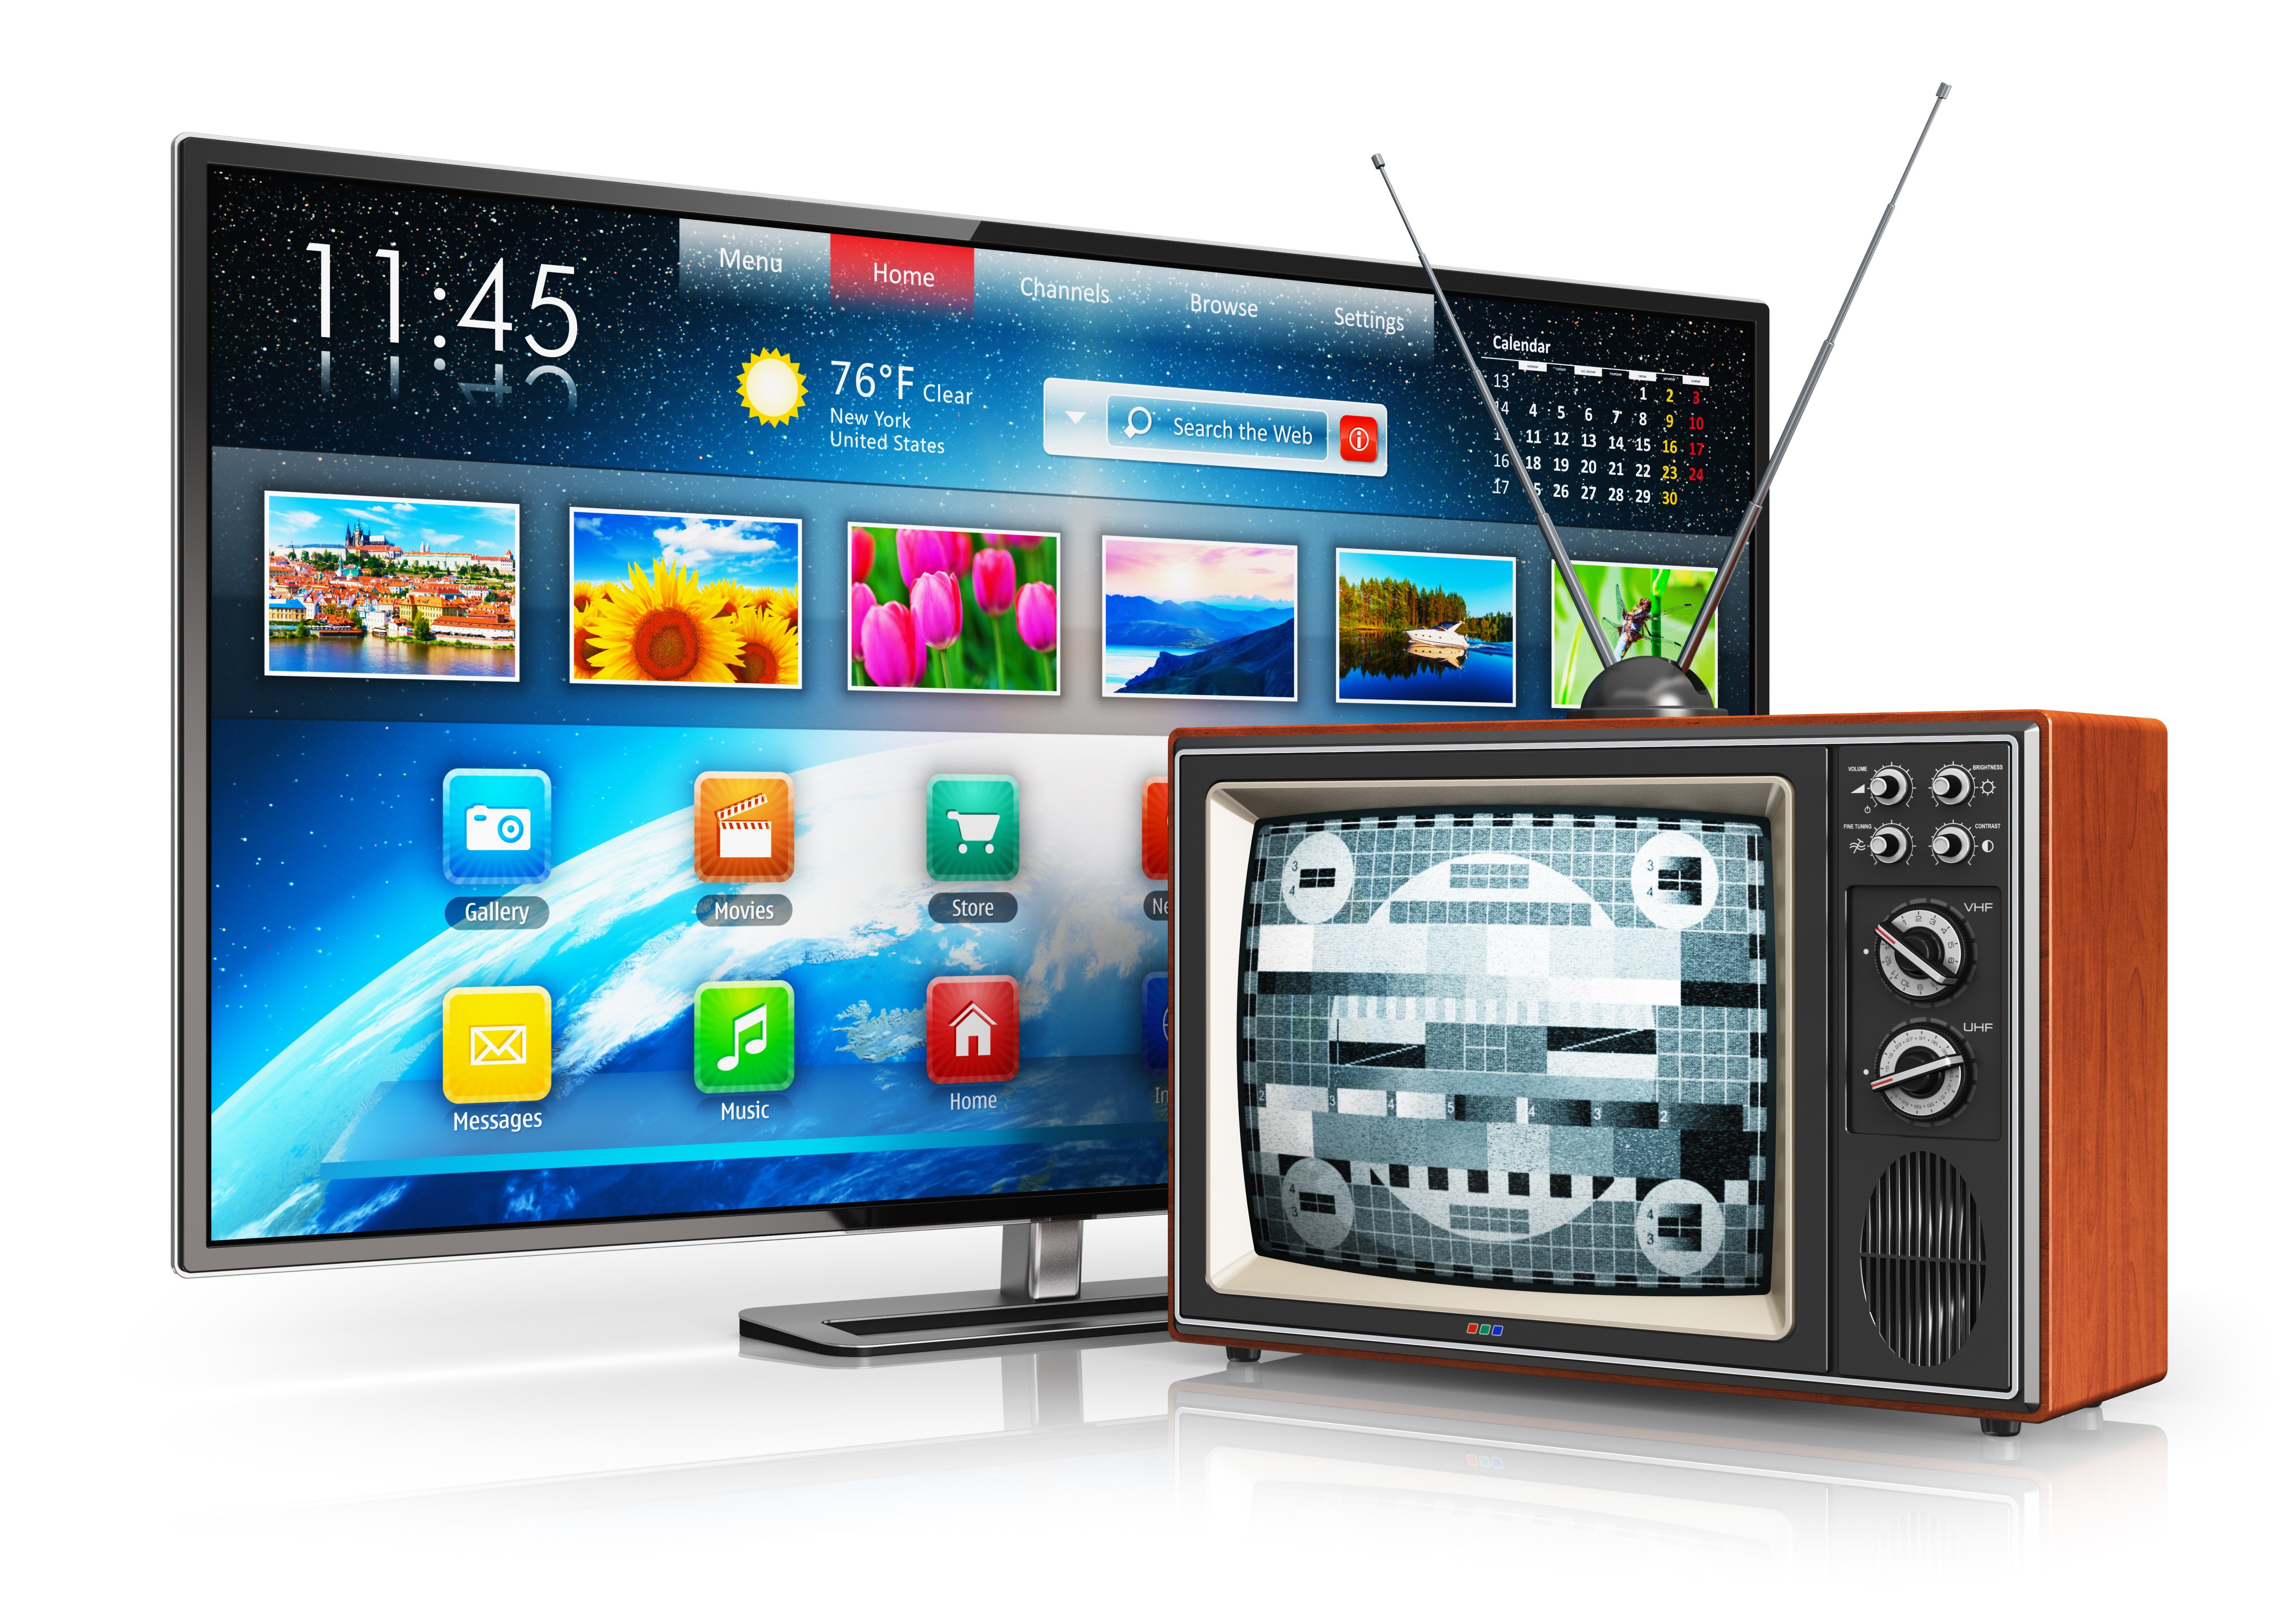 Is a TV digital or analog?